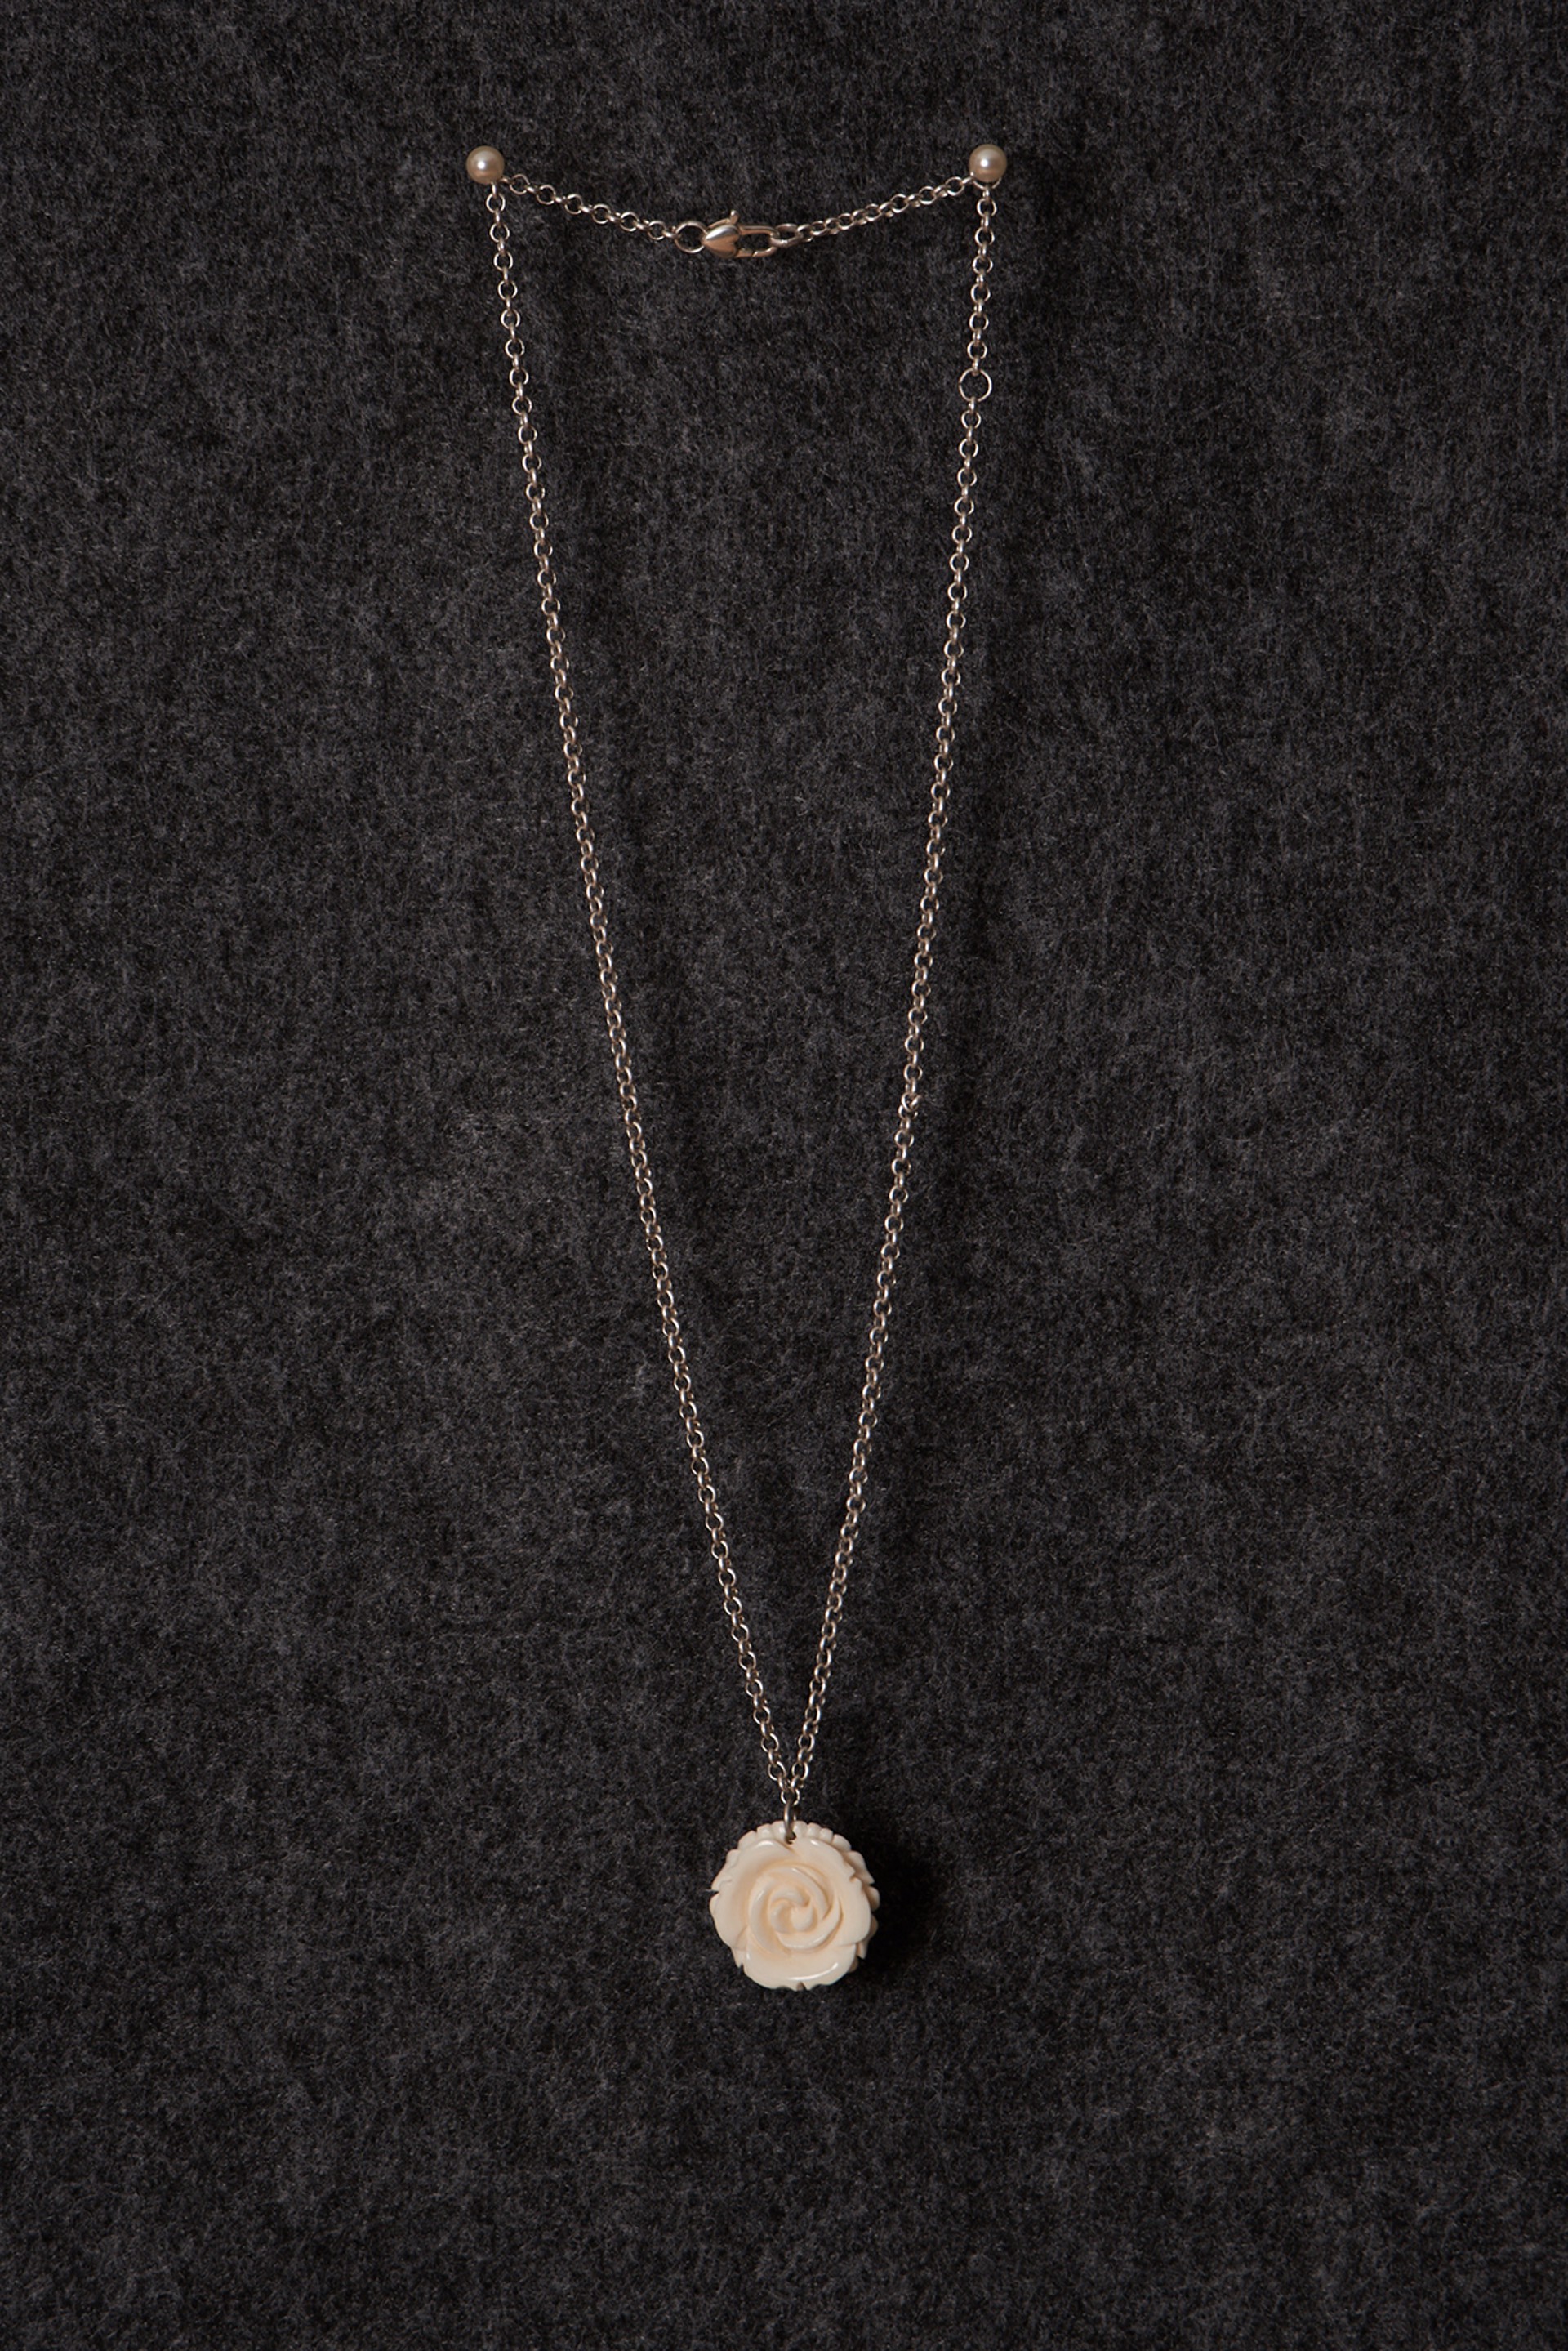 Silver Petite Rosebone Necklace by Cameron Johnson